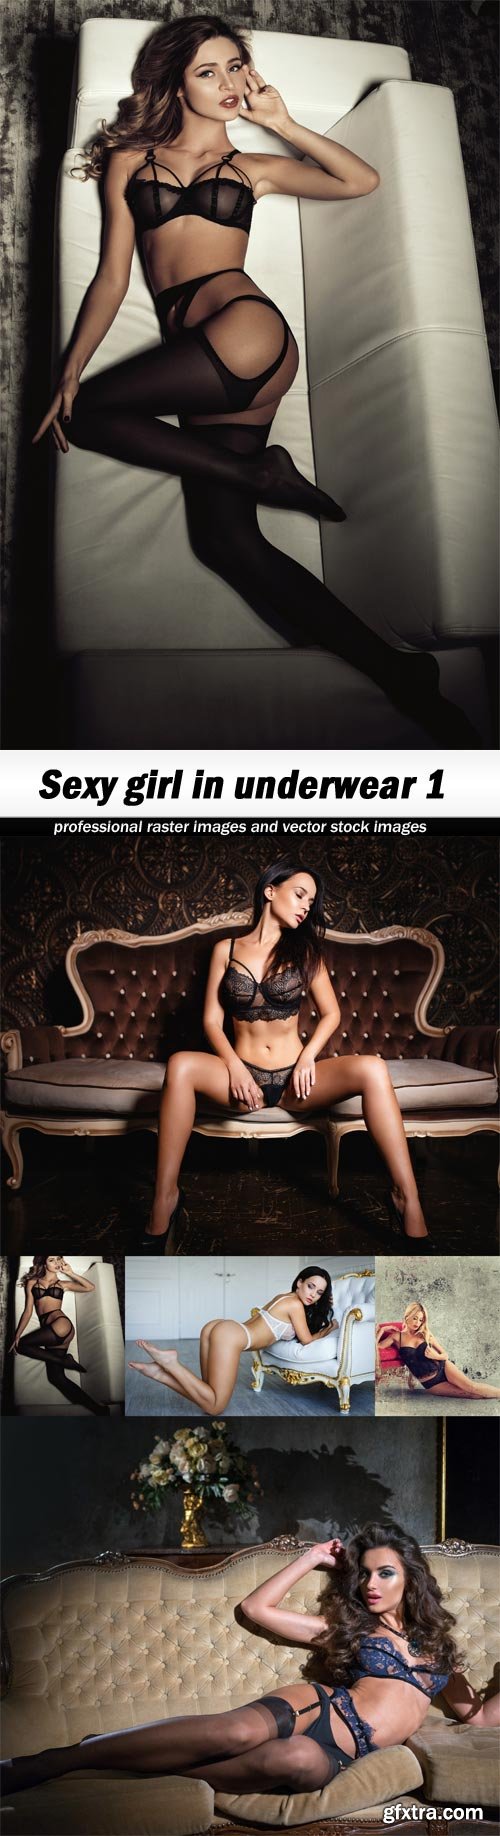 Sexy girl in underwear 1 - 5 UHQ JPEG